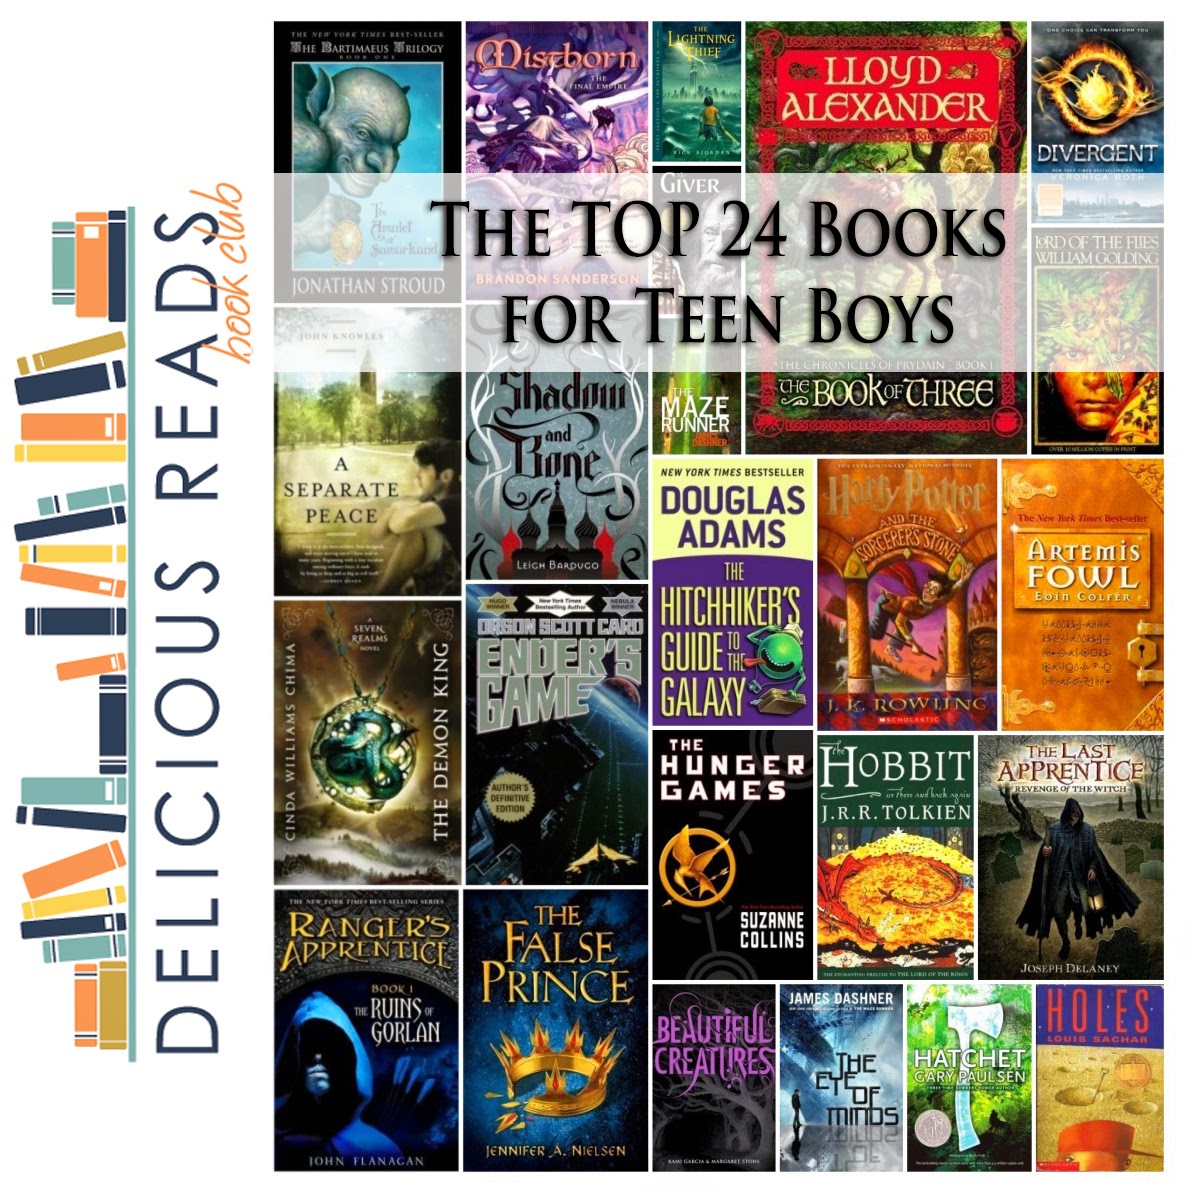 Allieret Globus Udvinding Author Robin King, Blog: Top 24 Books for Teen Boys